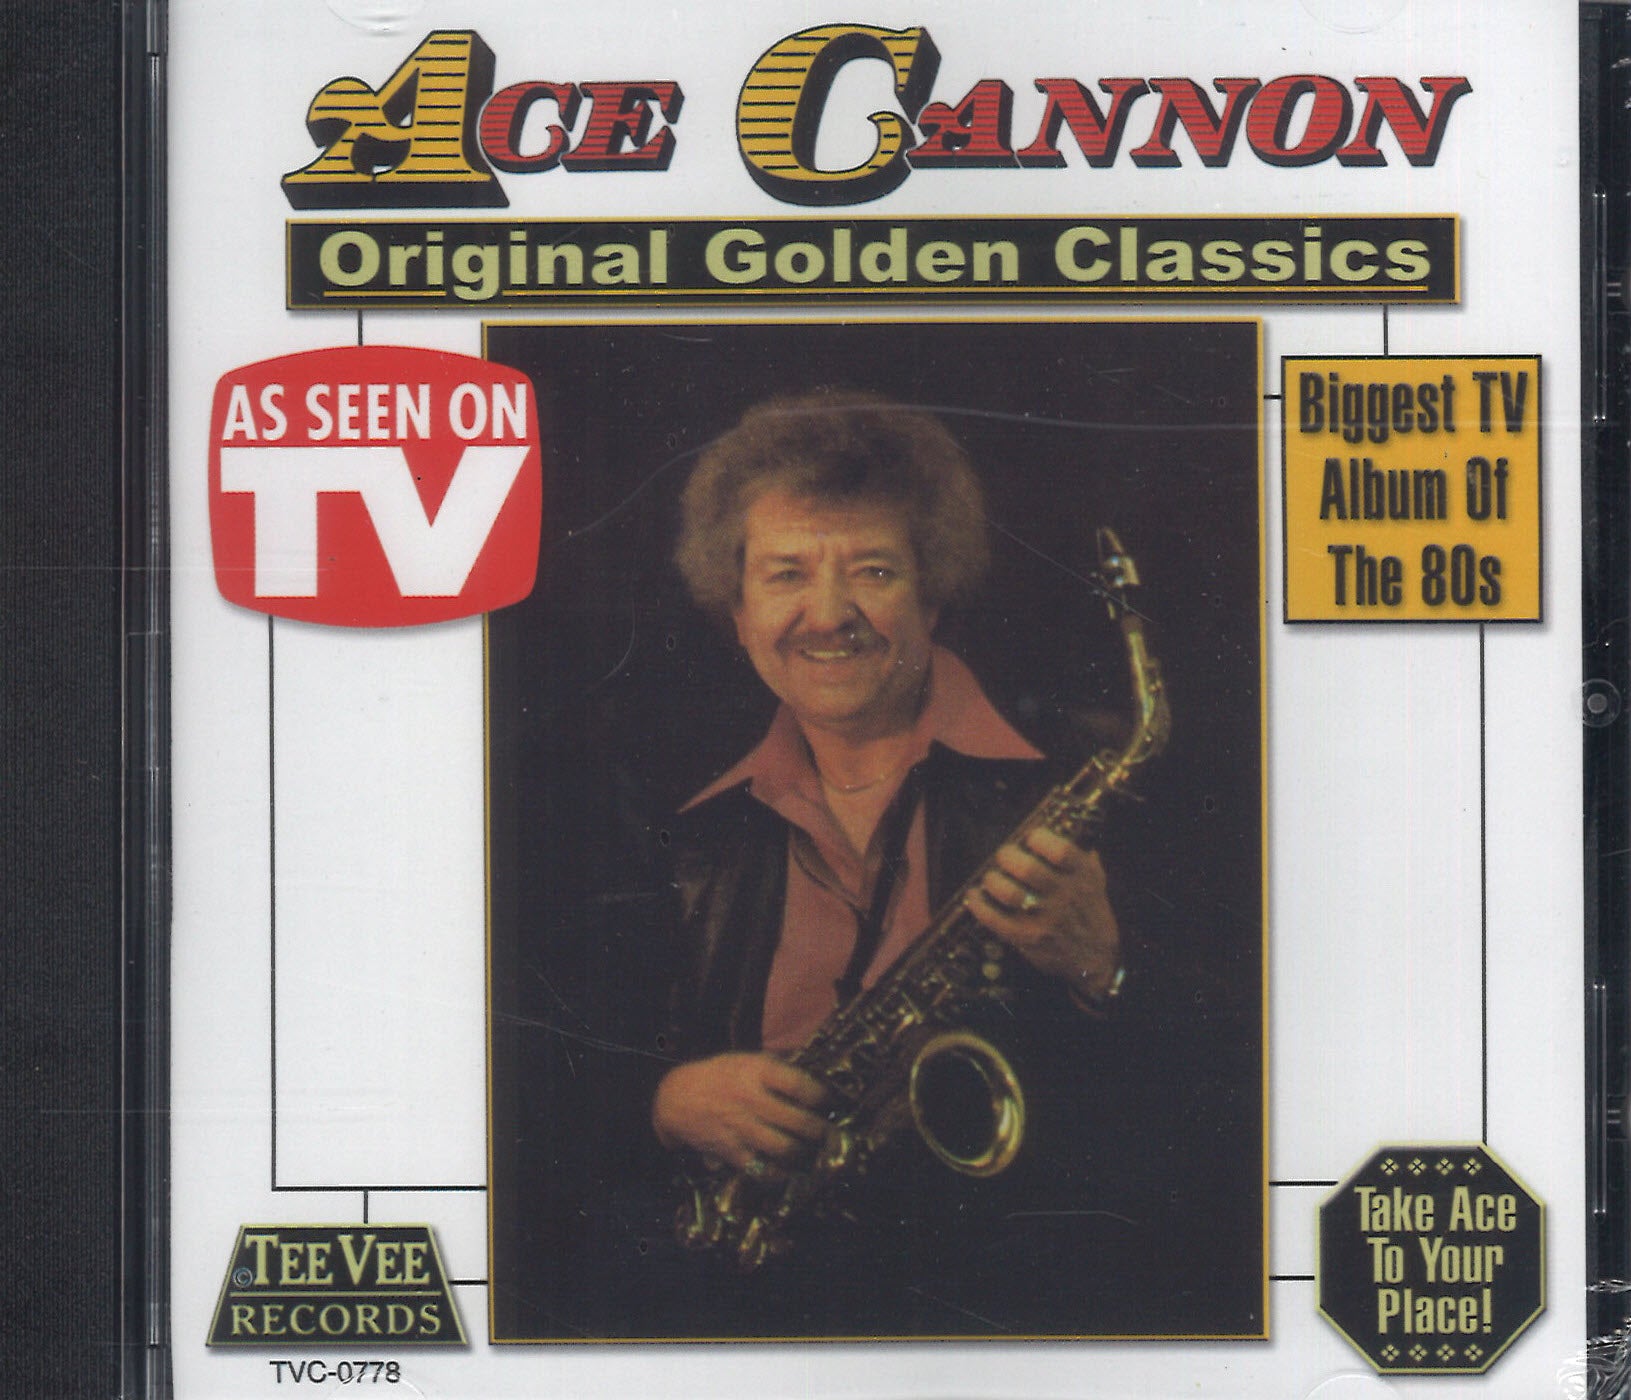 Ace Cannon Original Golden Classics